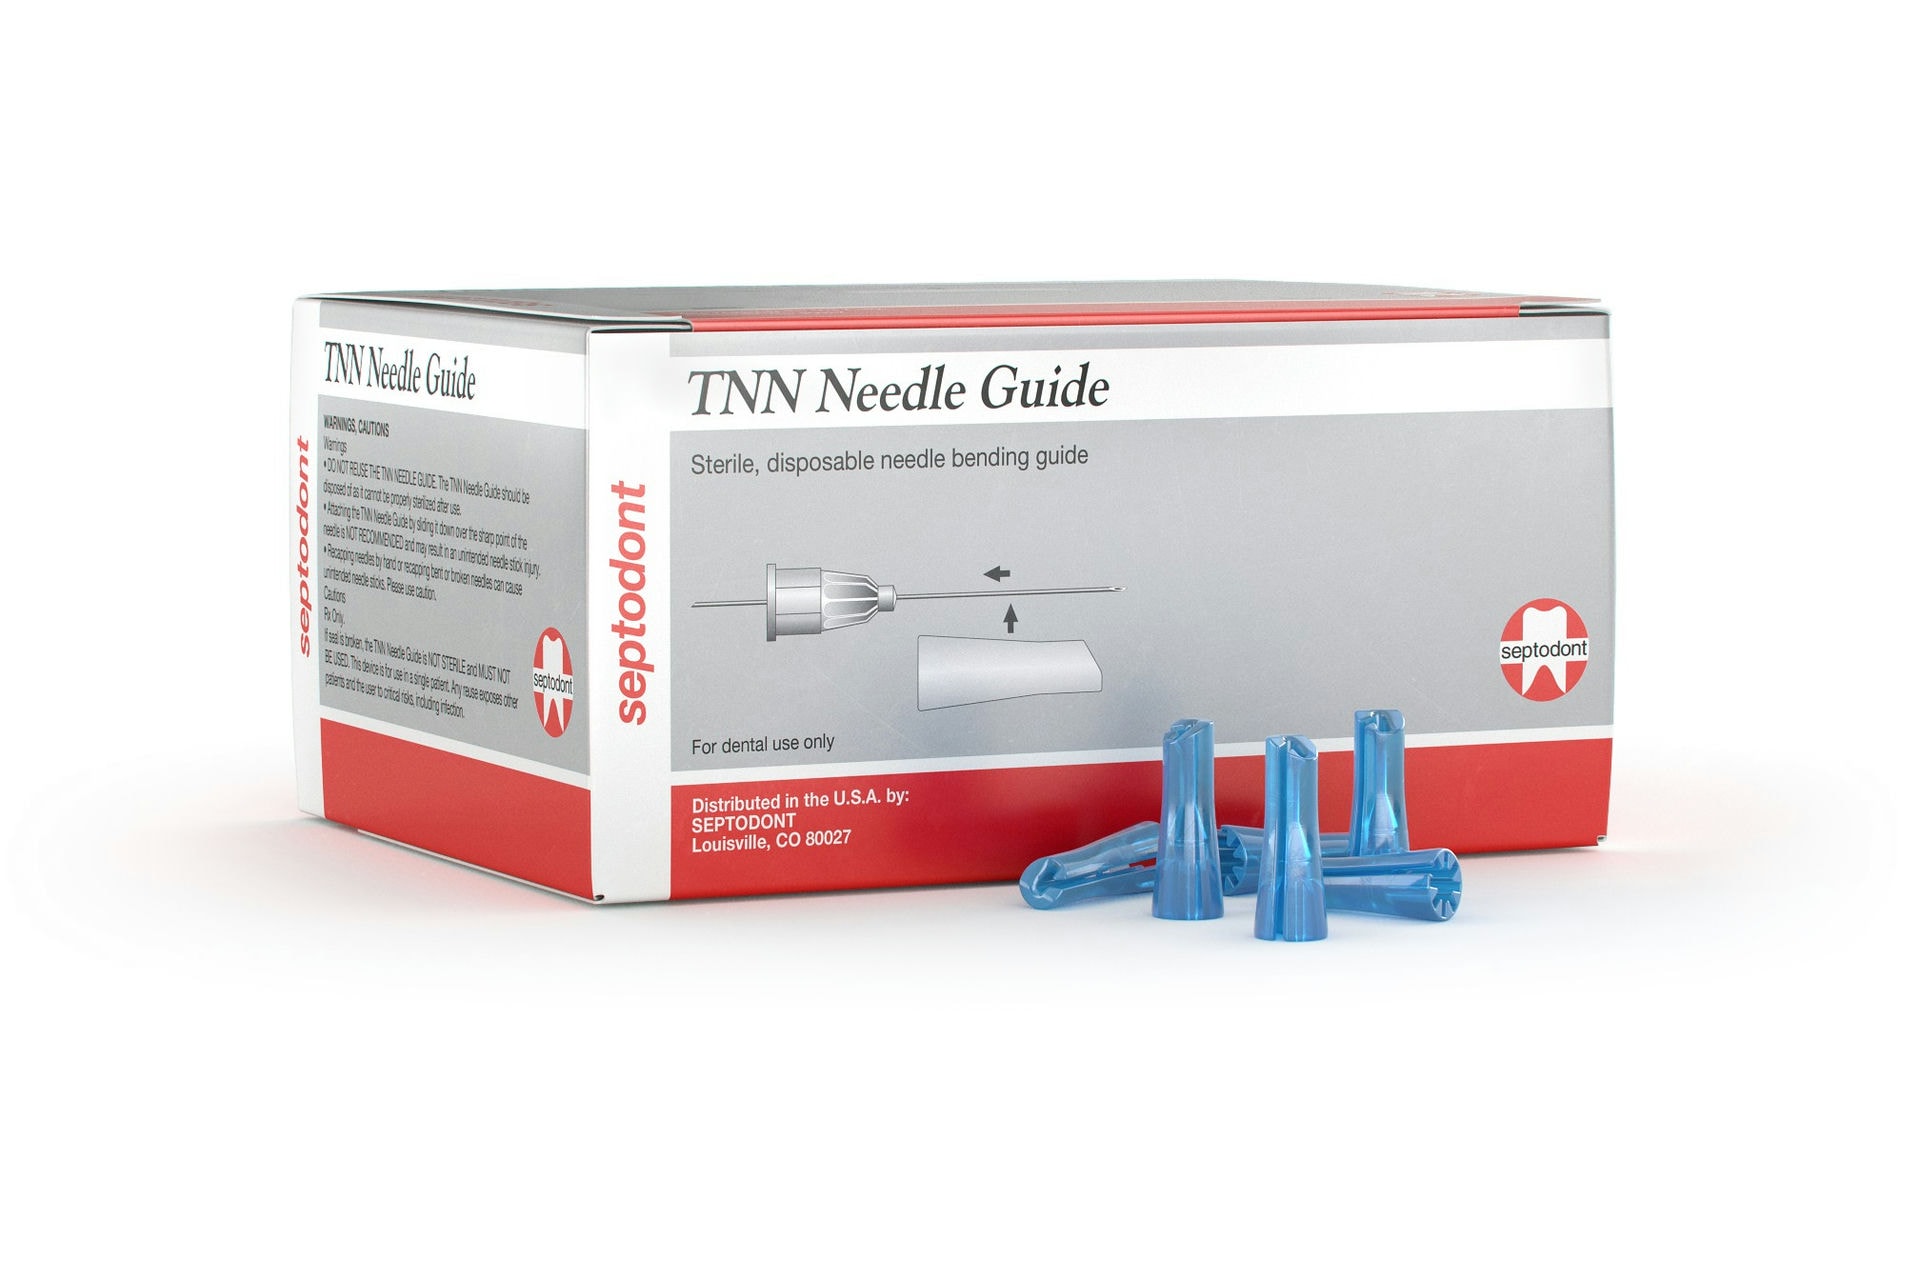 The TNN Needle Guide from Septodont